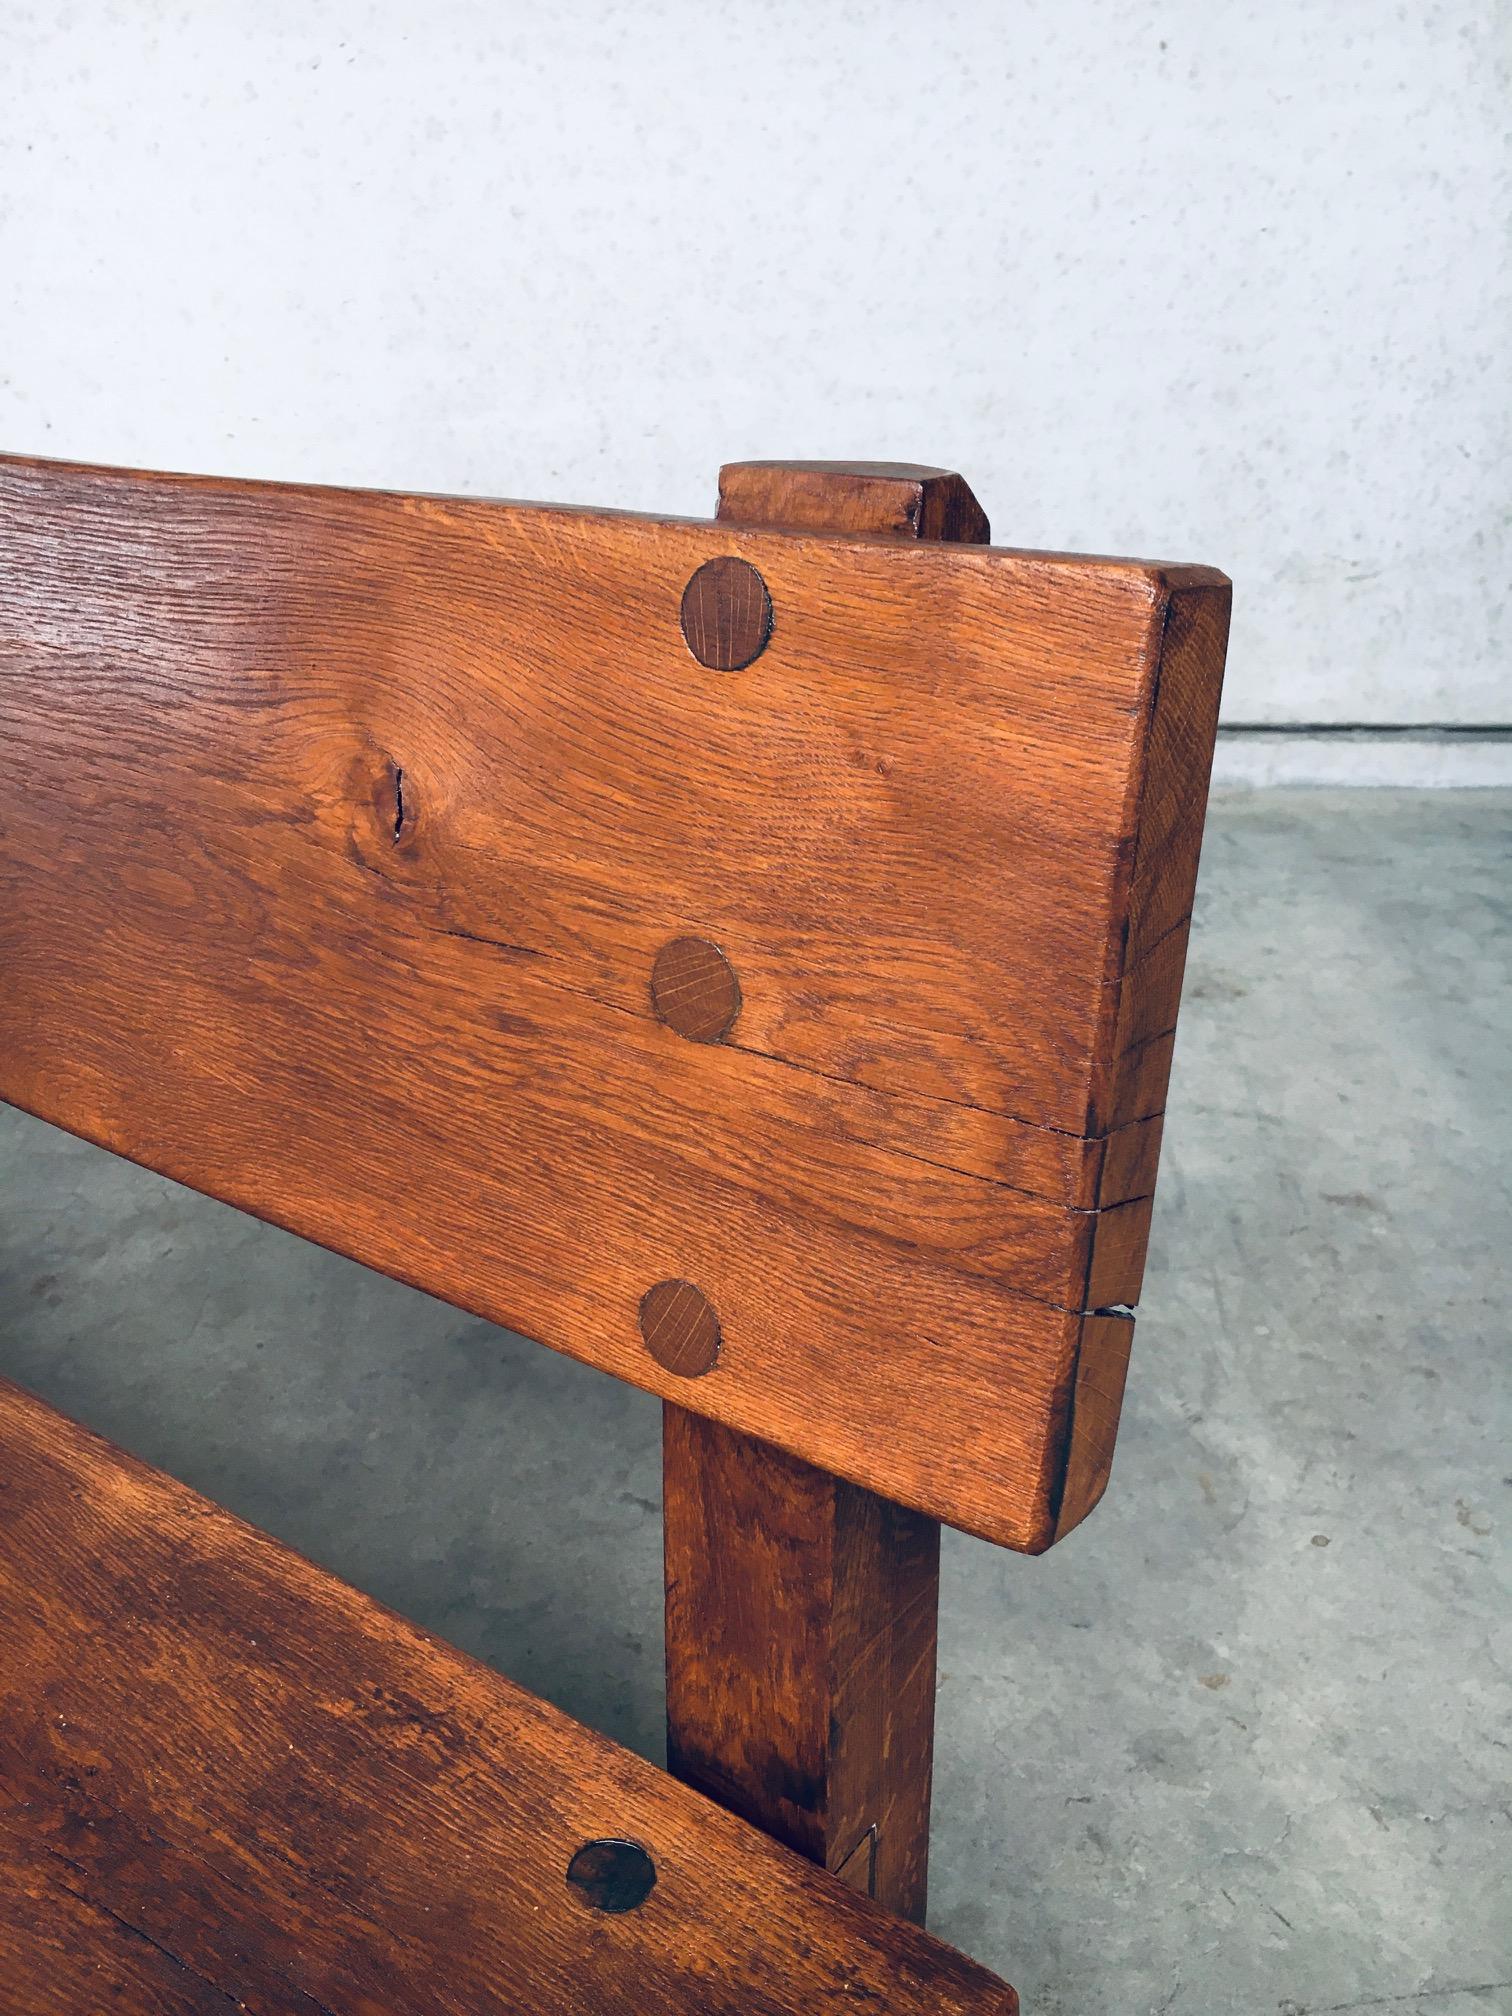 Brutalist Design Hand Crafted Solid Oak Bench, Belgium 1960's For Sale 10